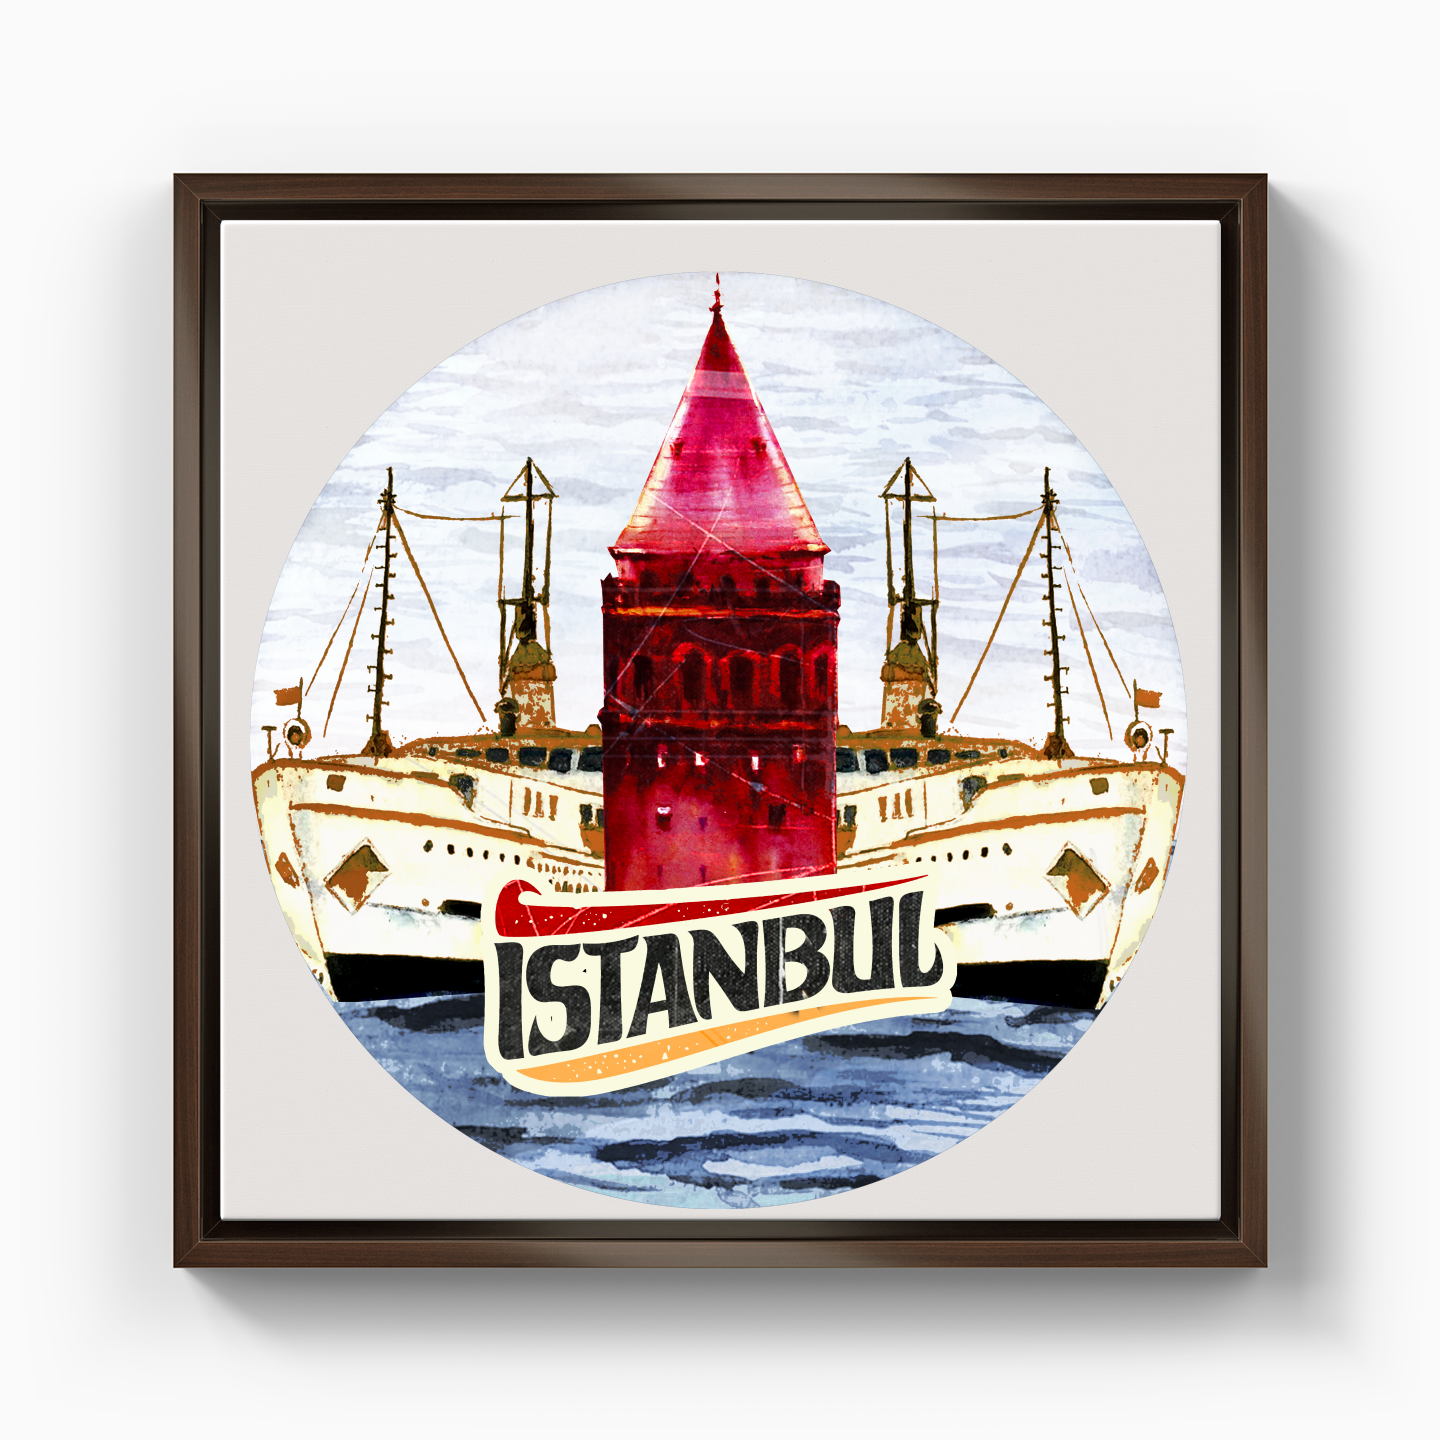 İstanbul - Vapurlar ve Galata Kulesi - Kanvas Tablo